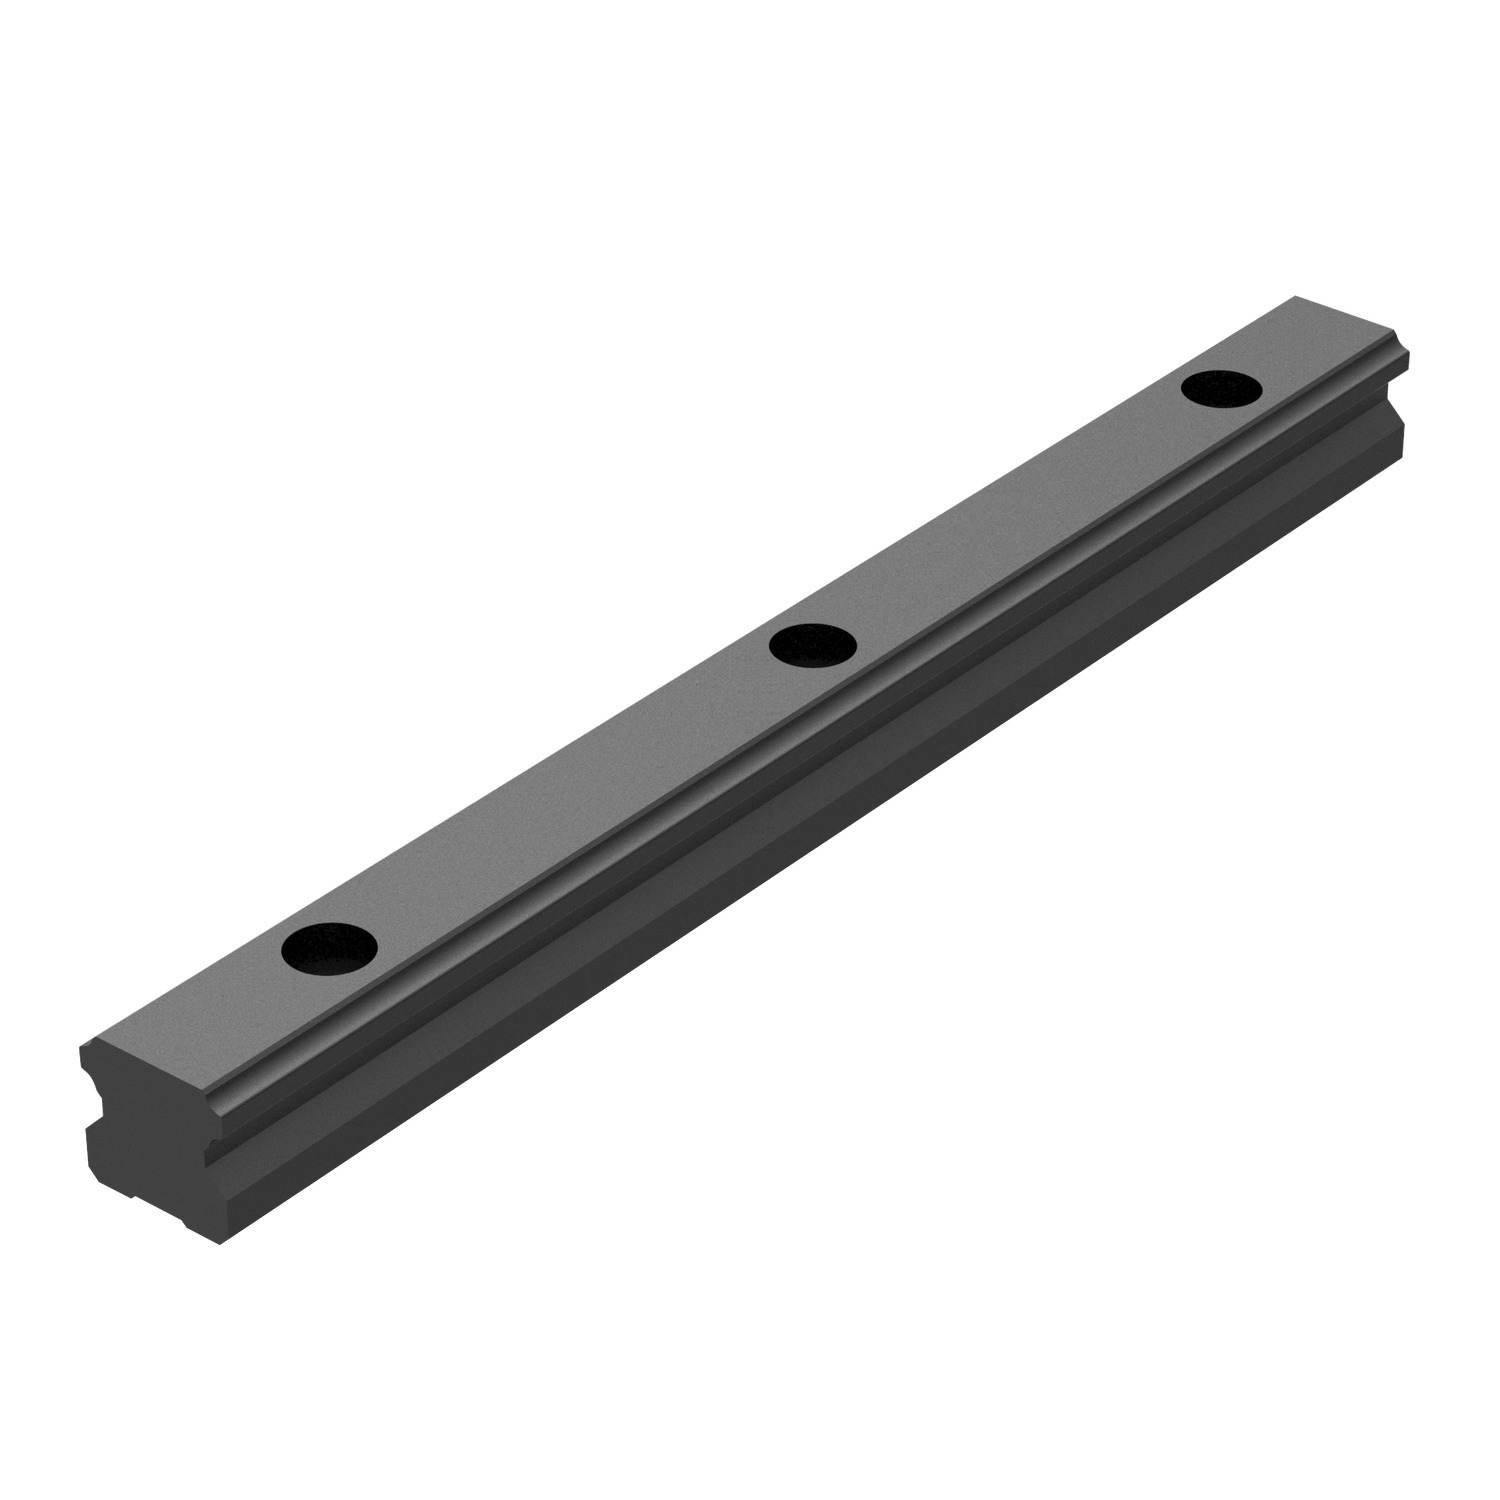 L1016.BL15-0520 Black Linear guide rail 15mm 520 Black Oxide